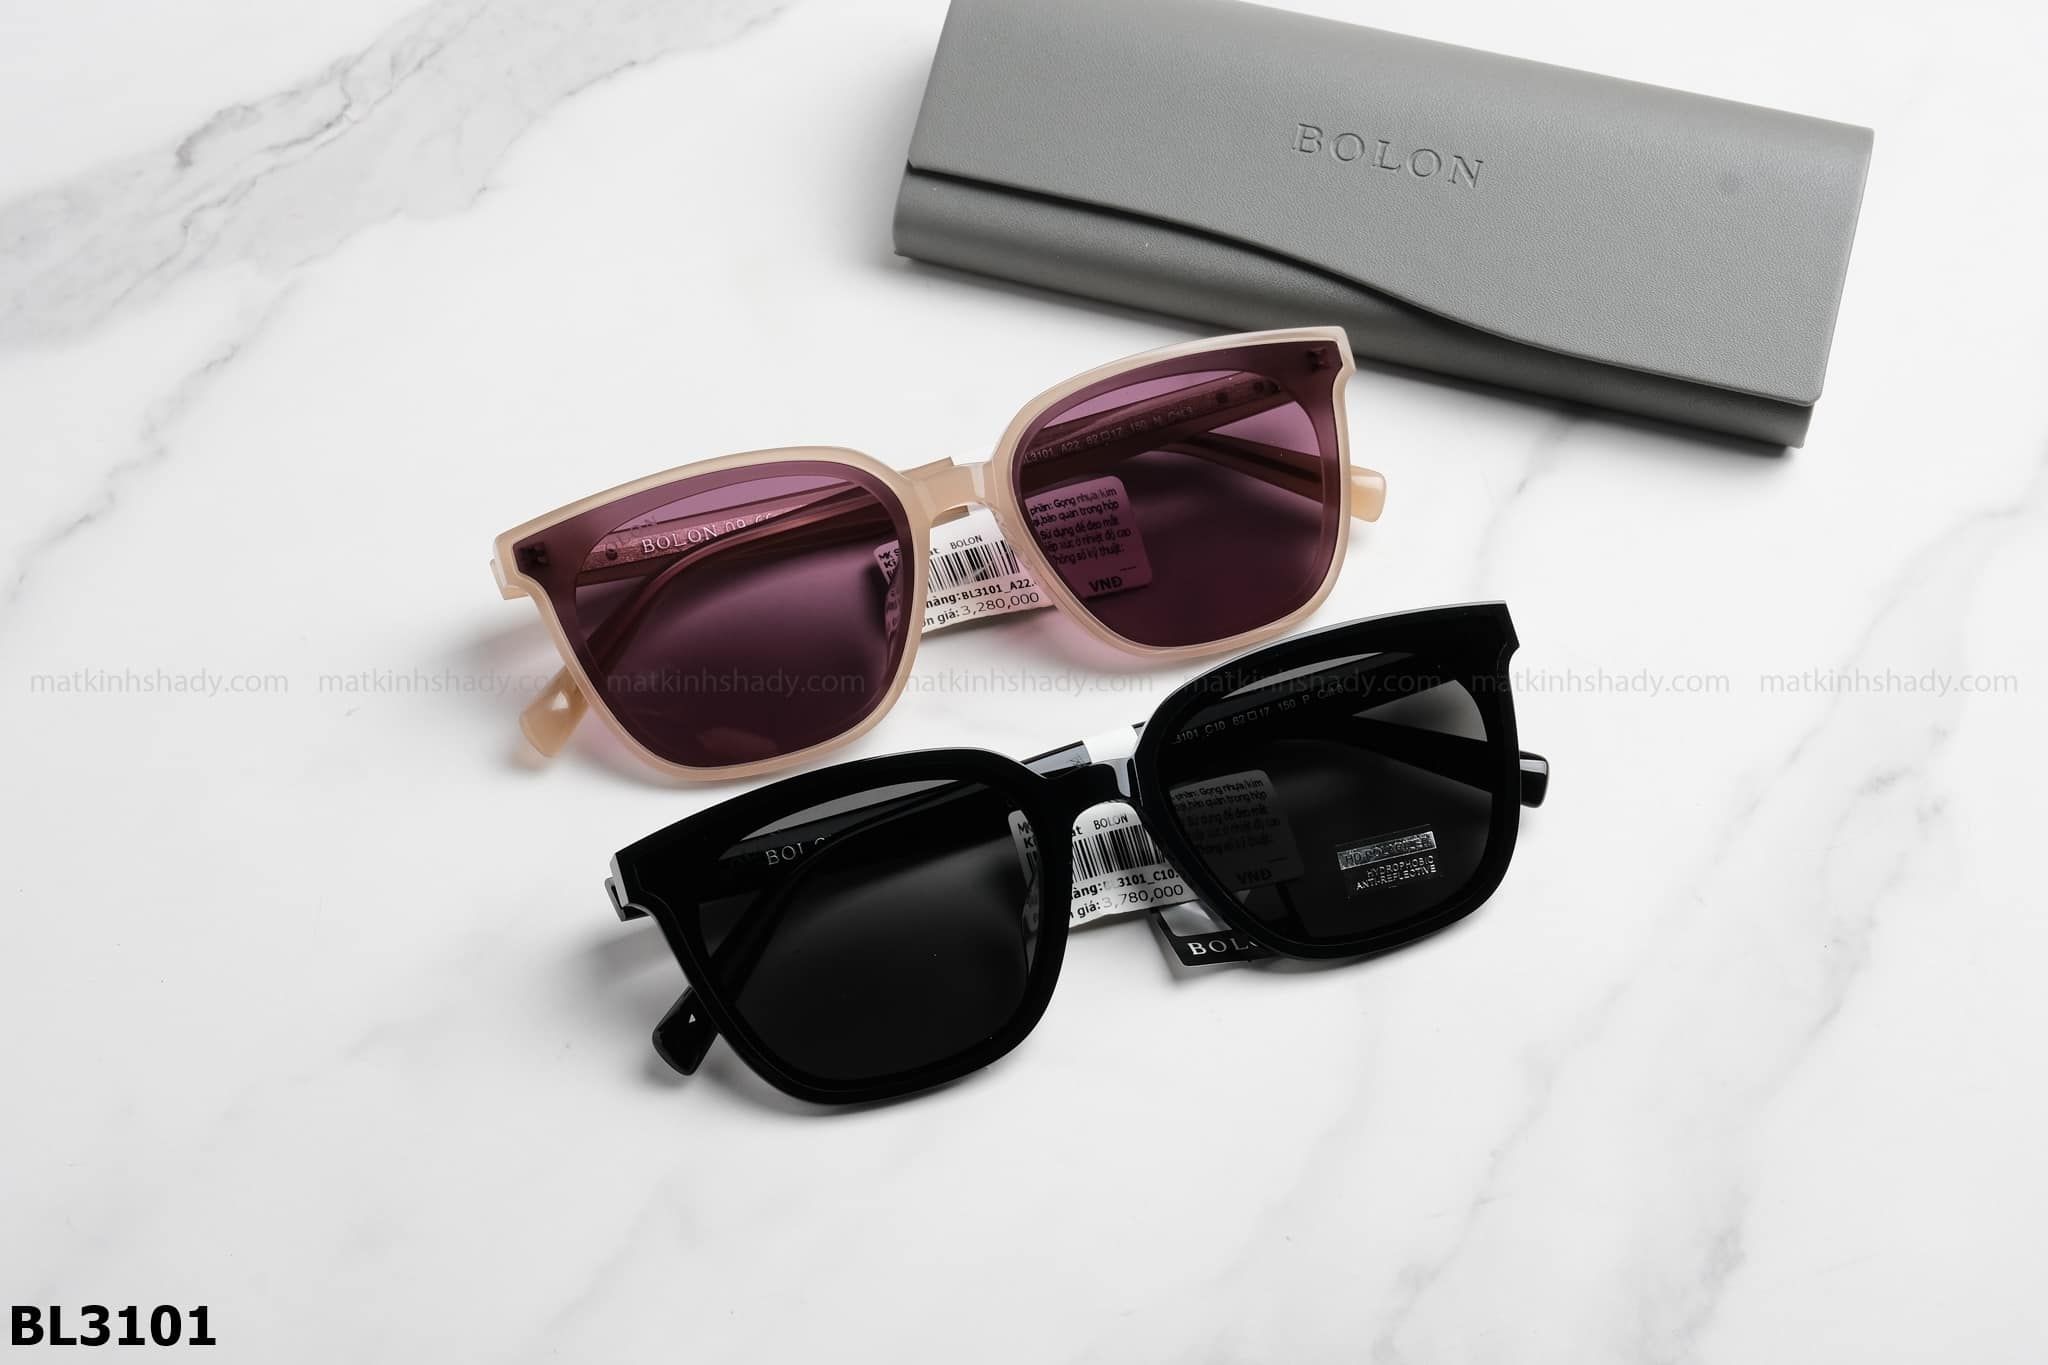  Bolon Eyewear - Sunglasses - BL3101 